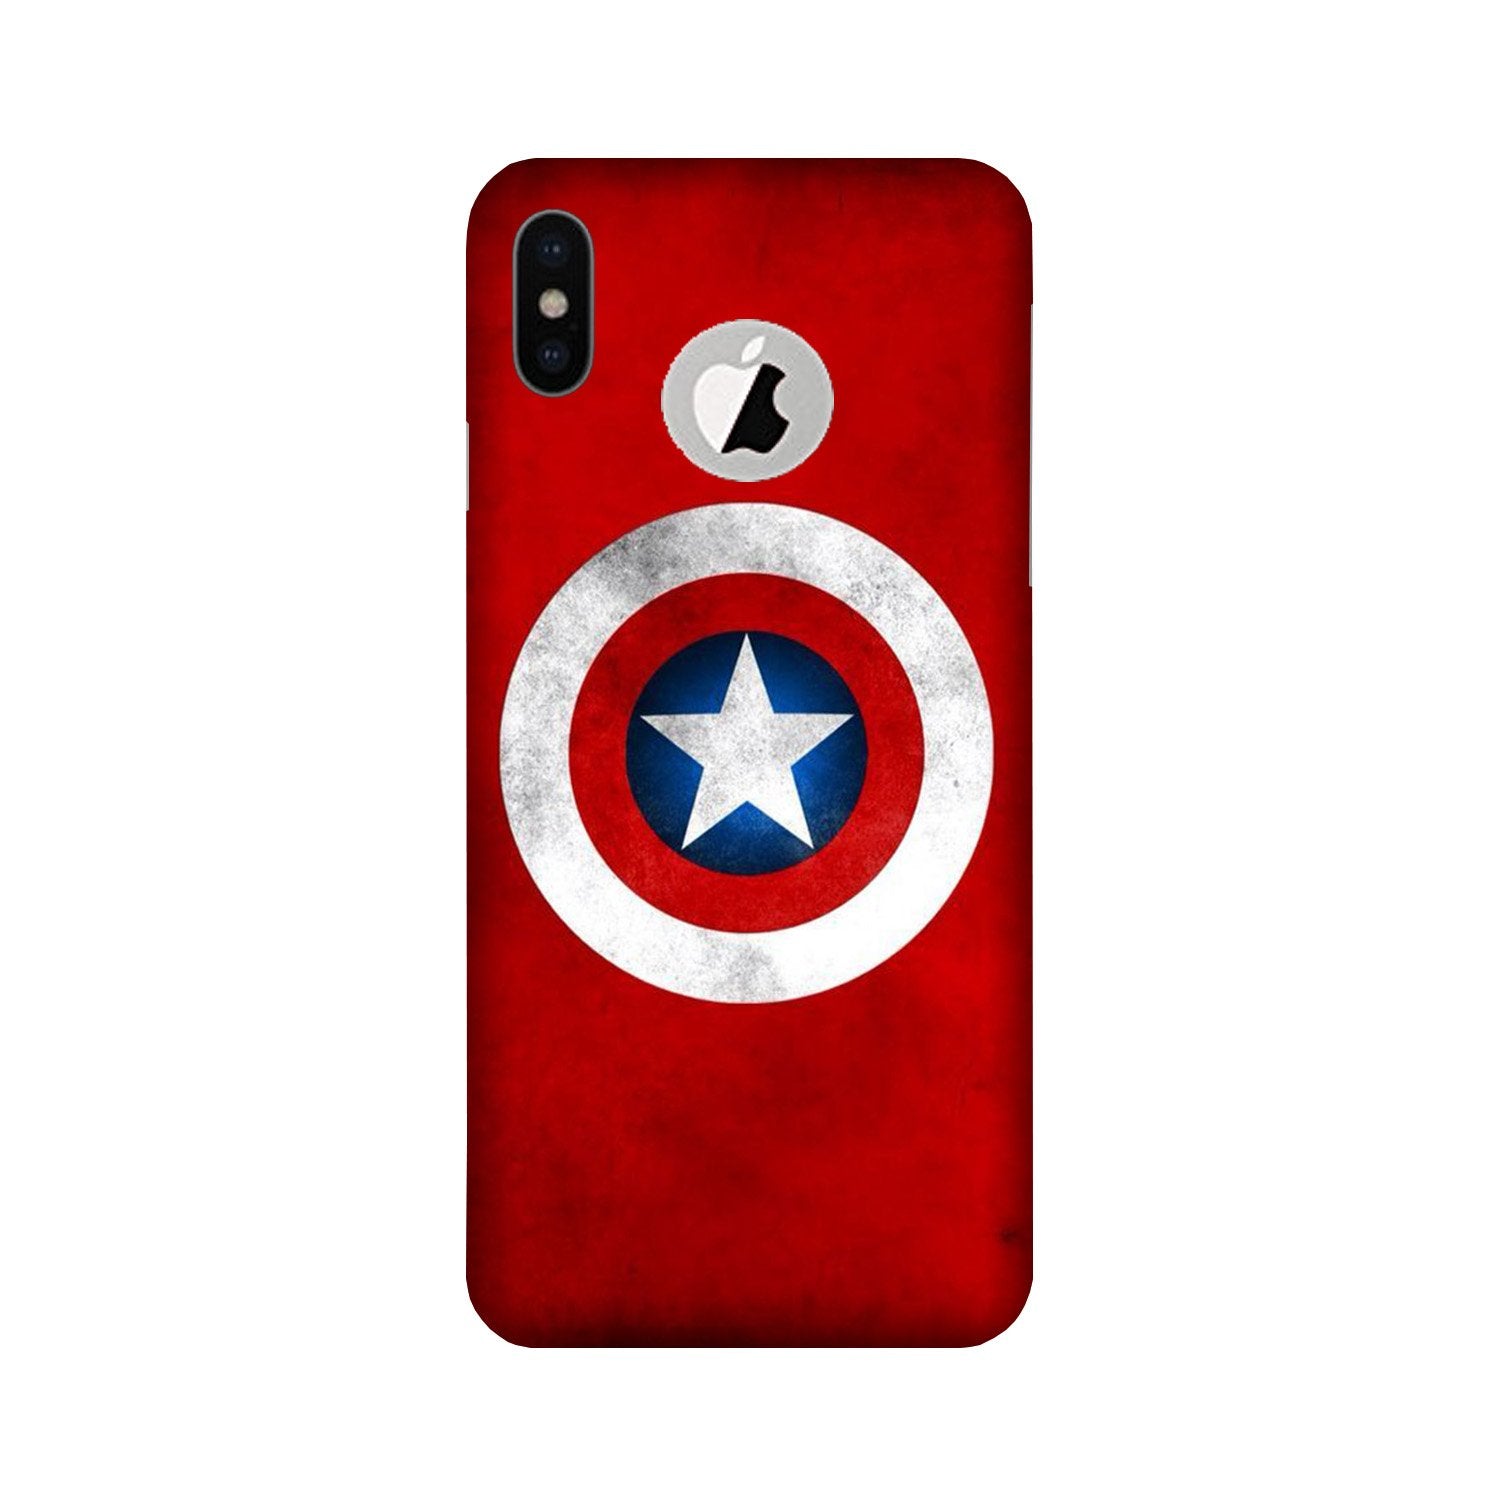 Captain America Case for iPhone X logo cut (Design No. 249)